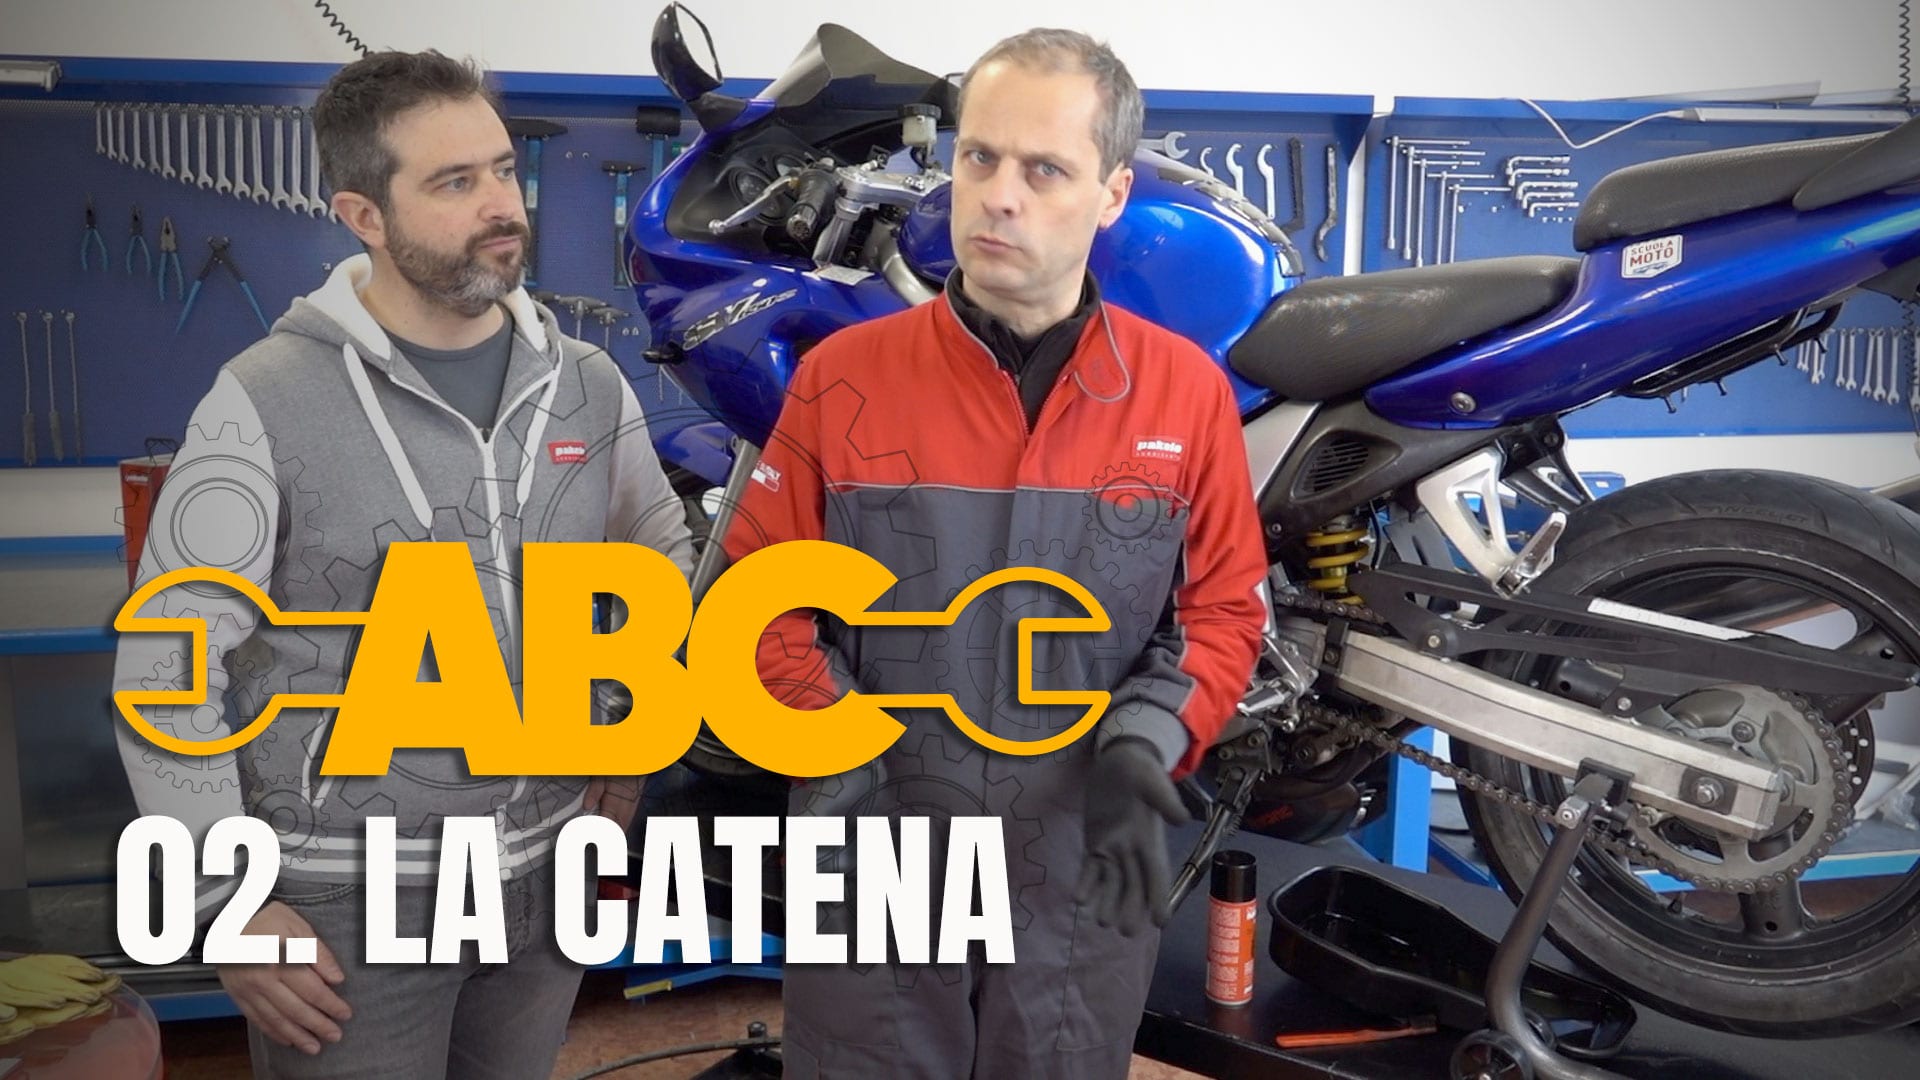 maintenance motorcycle chain motorcycle motoreetto school Pakelo tutorial